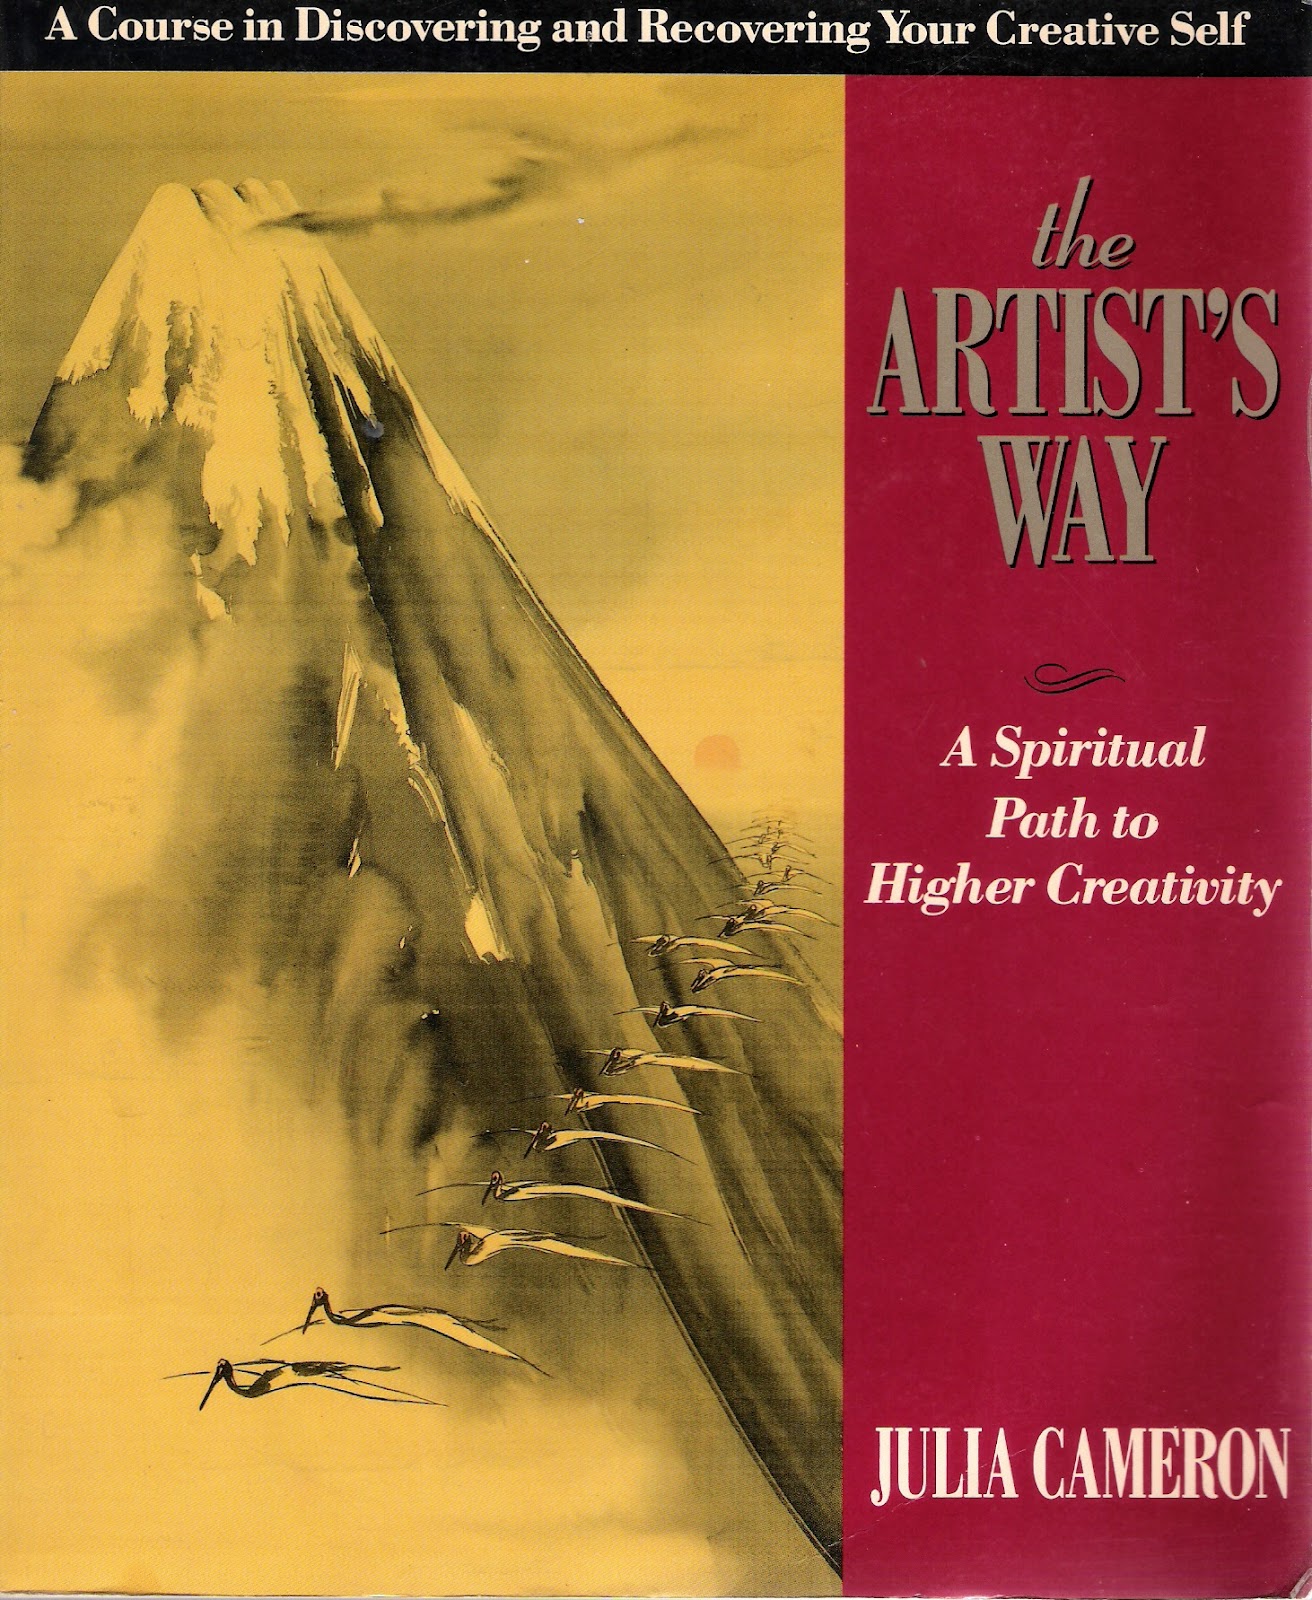 Julia Cameron: The artist's way (1998, Jeremy P Tarcher)